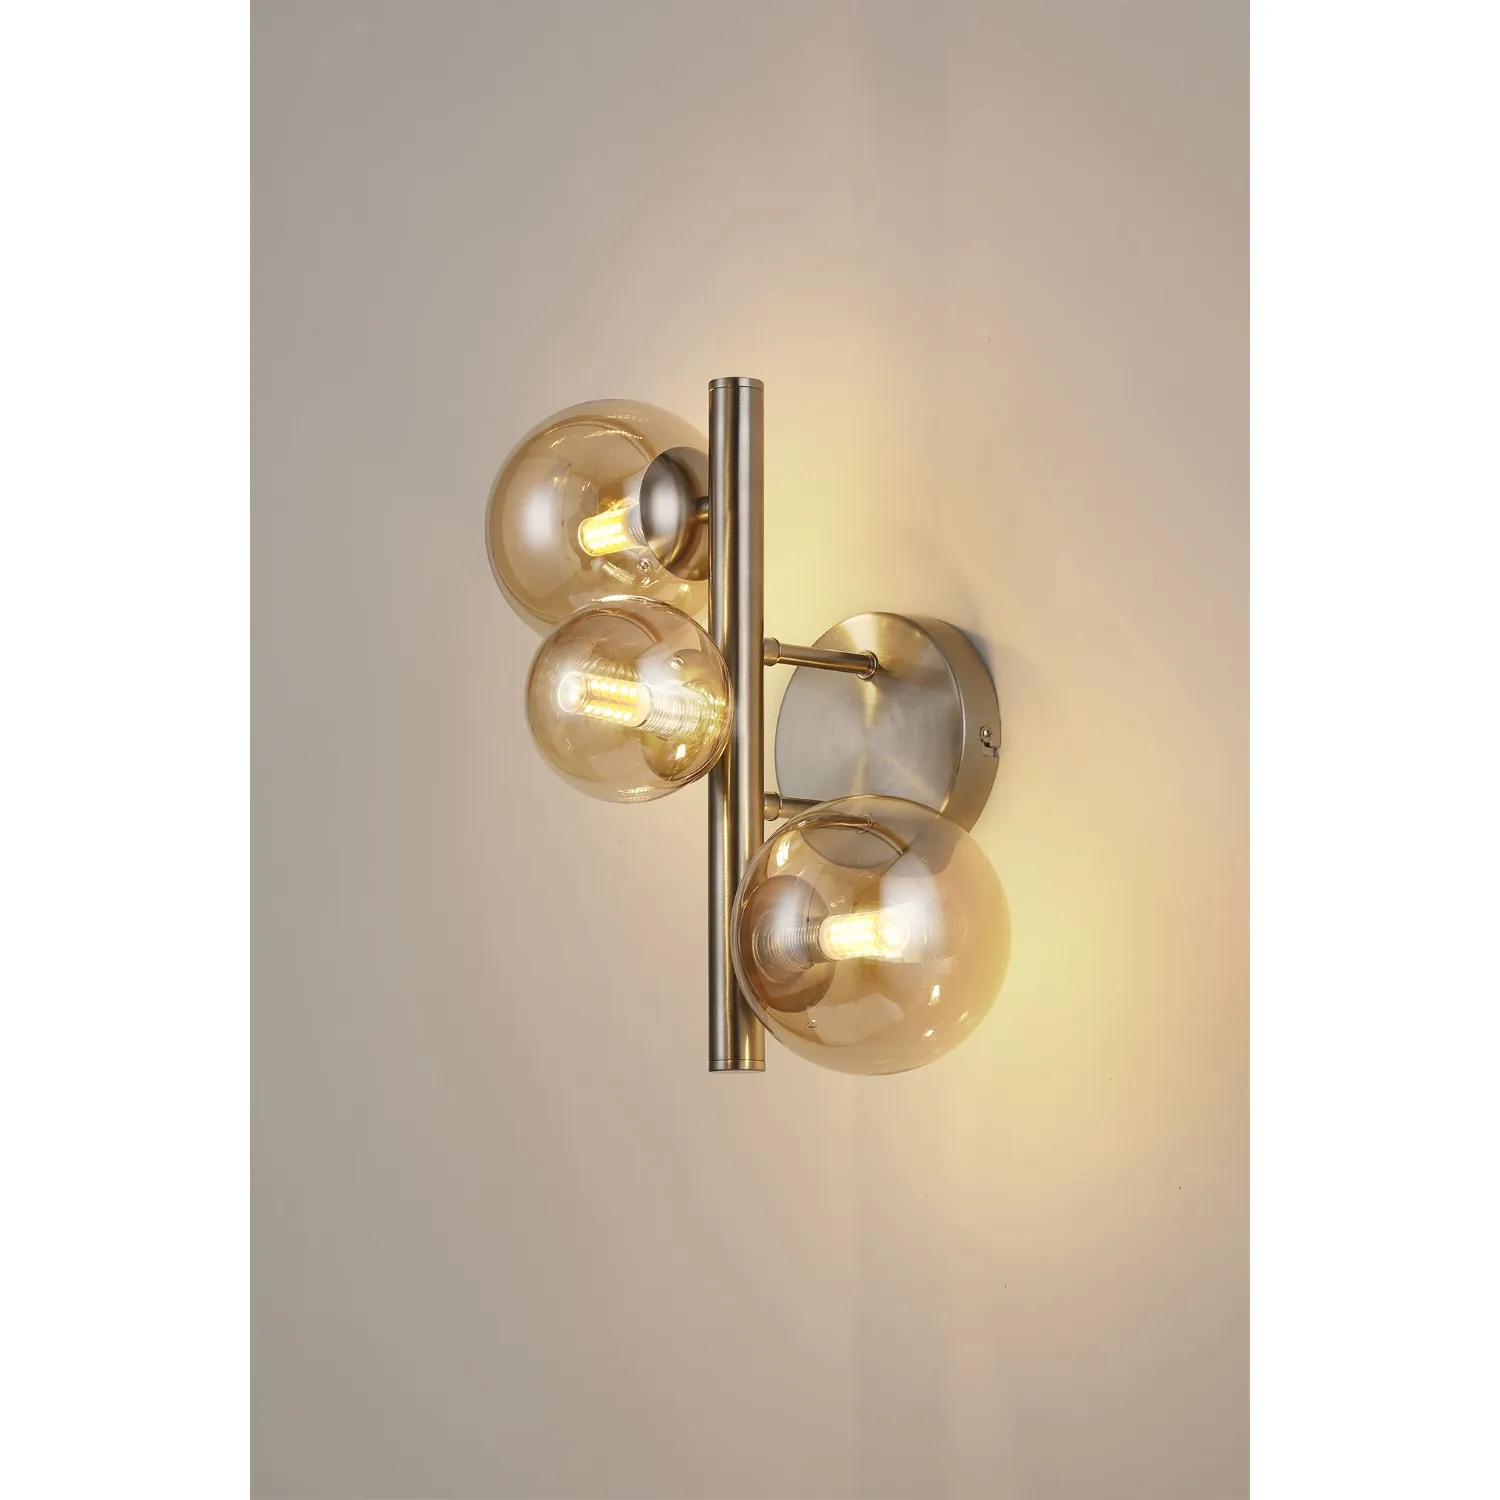 Tenterden Wall Lamp, 3 x G9, Satin Nickel, Amber Plated Glass